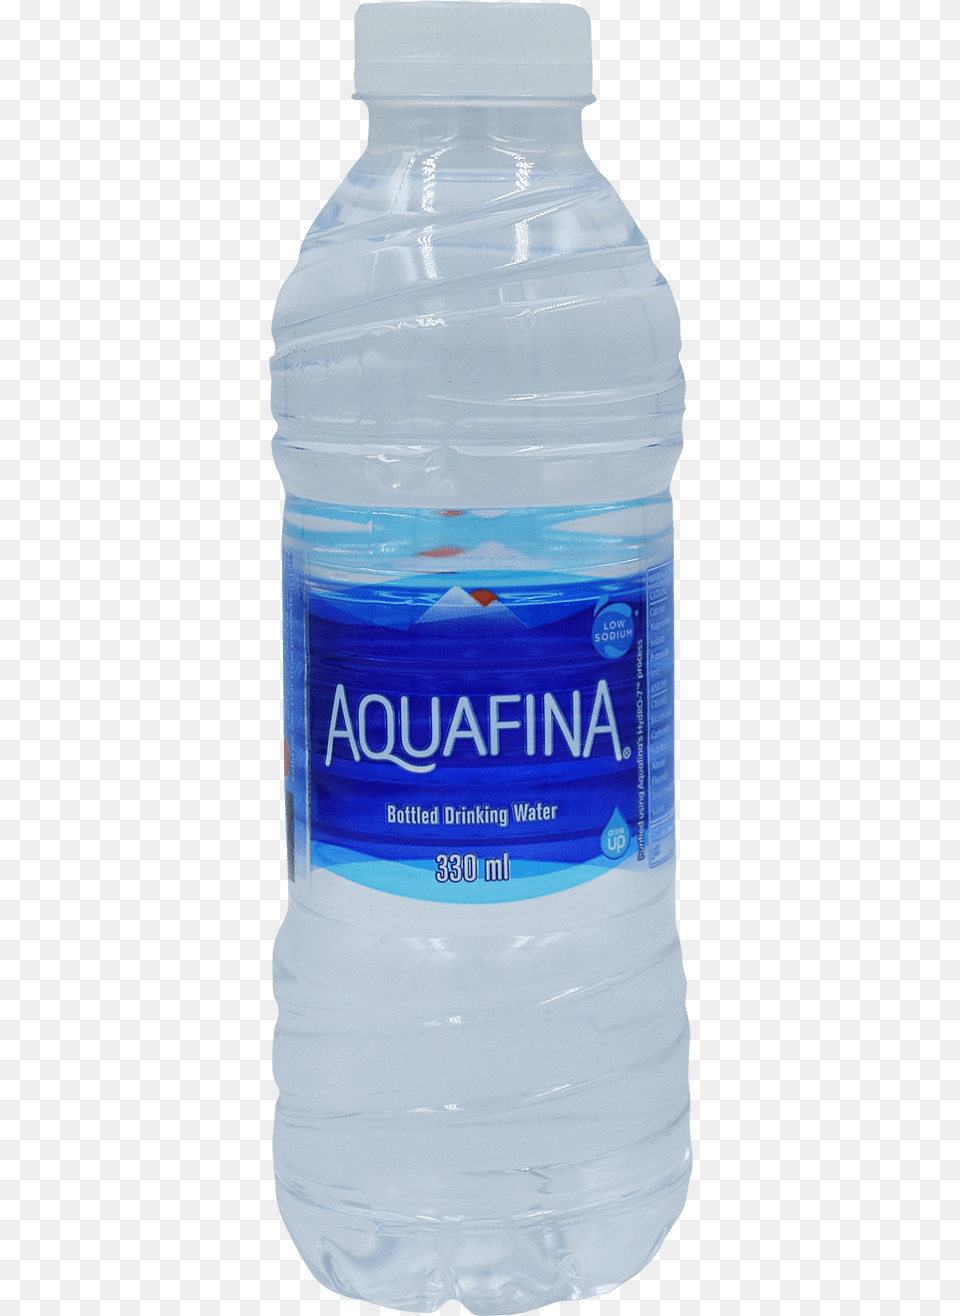 Aquafina Drinking Water 330ml Aquafina Bottled Drinking Water, Beverage, Bottle, Mineral Water, Water Bottle Free Transparent Png